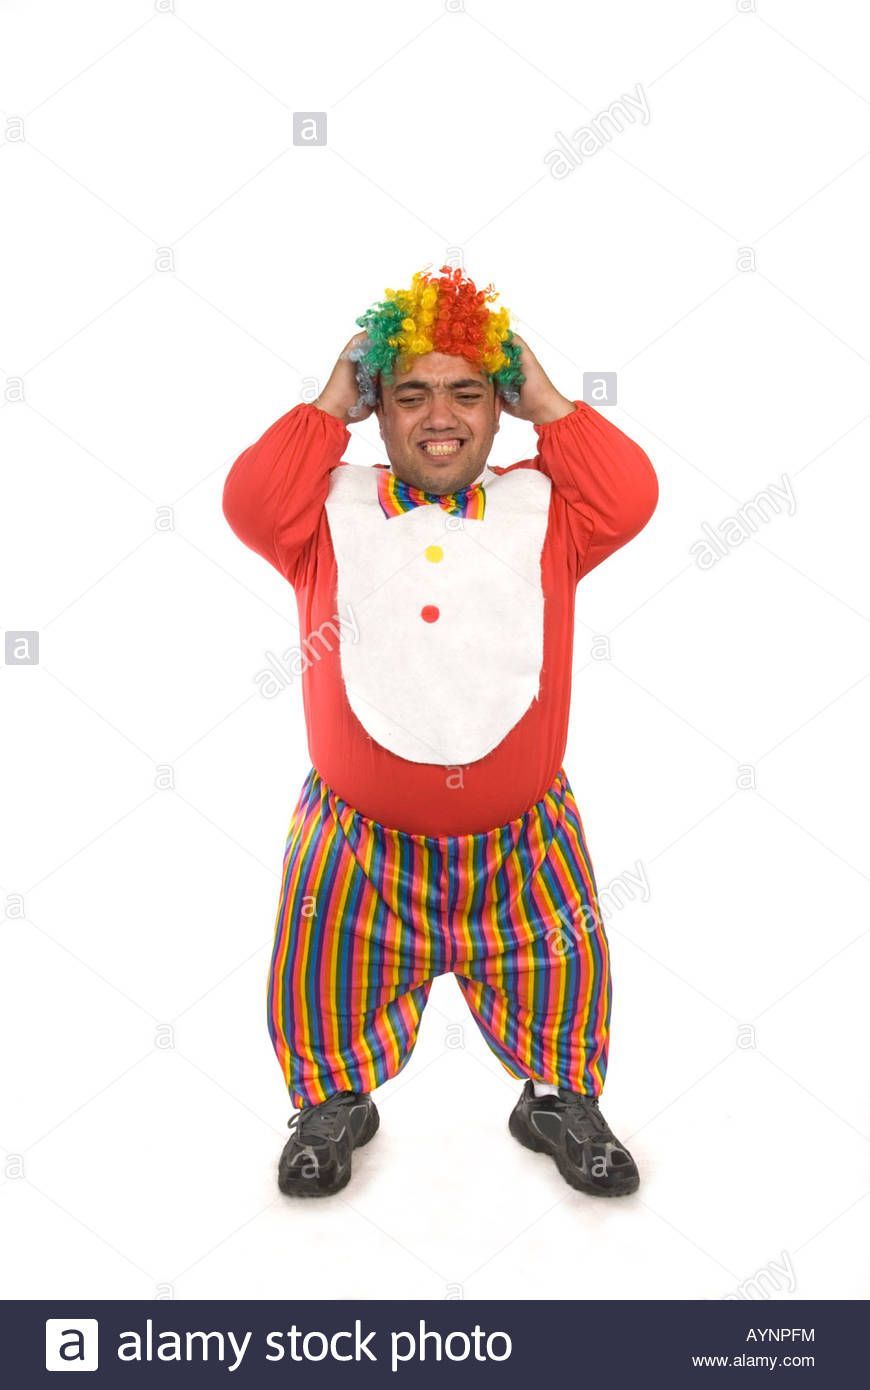 Pictures of midget clowns